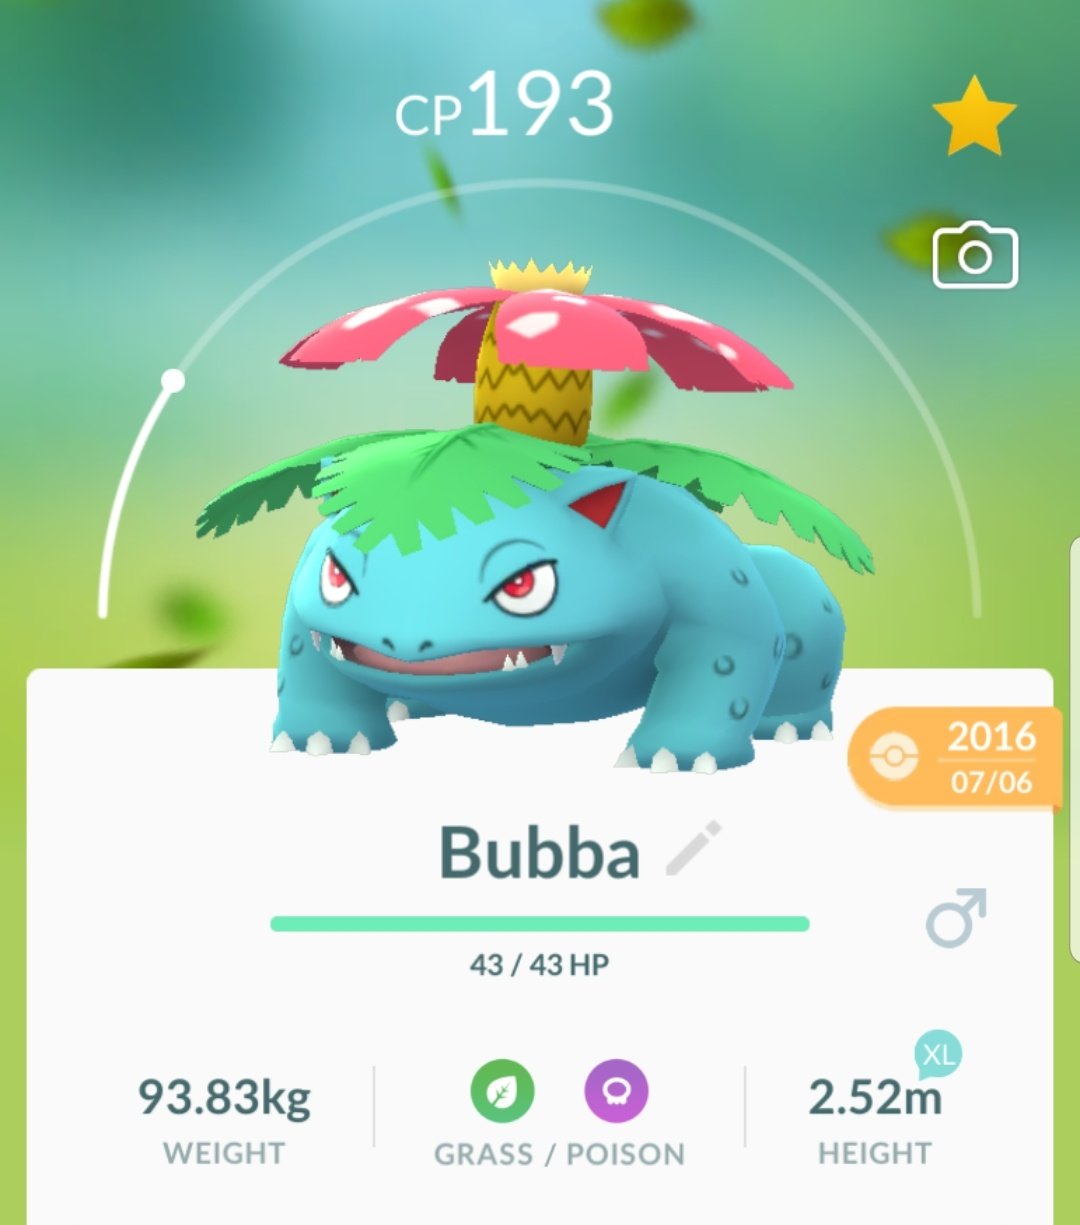 pokemongo #pokemon #shiny #bulbasaur